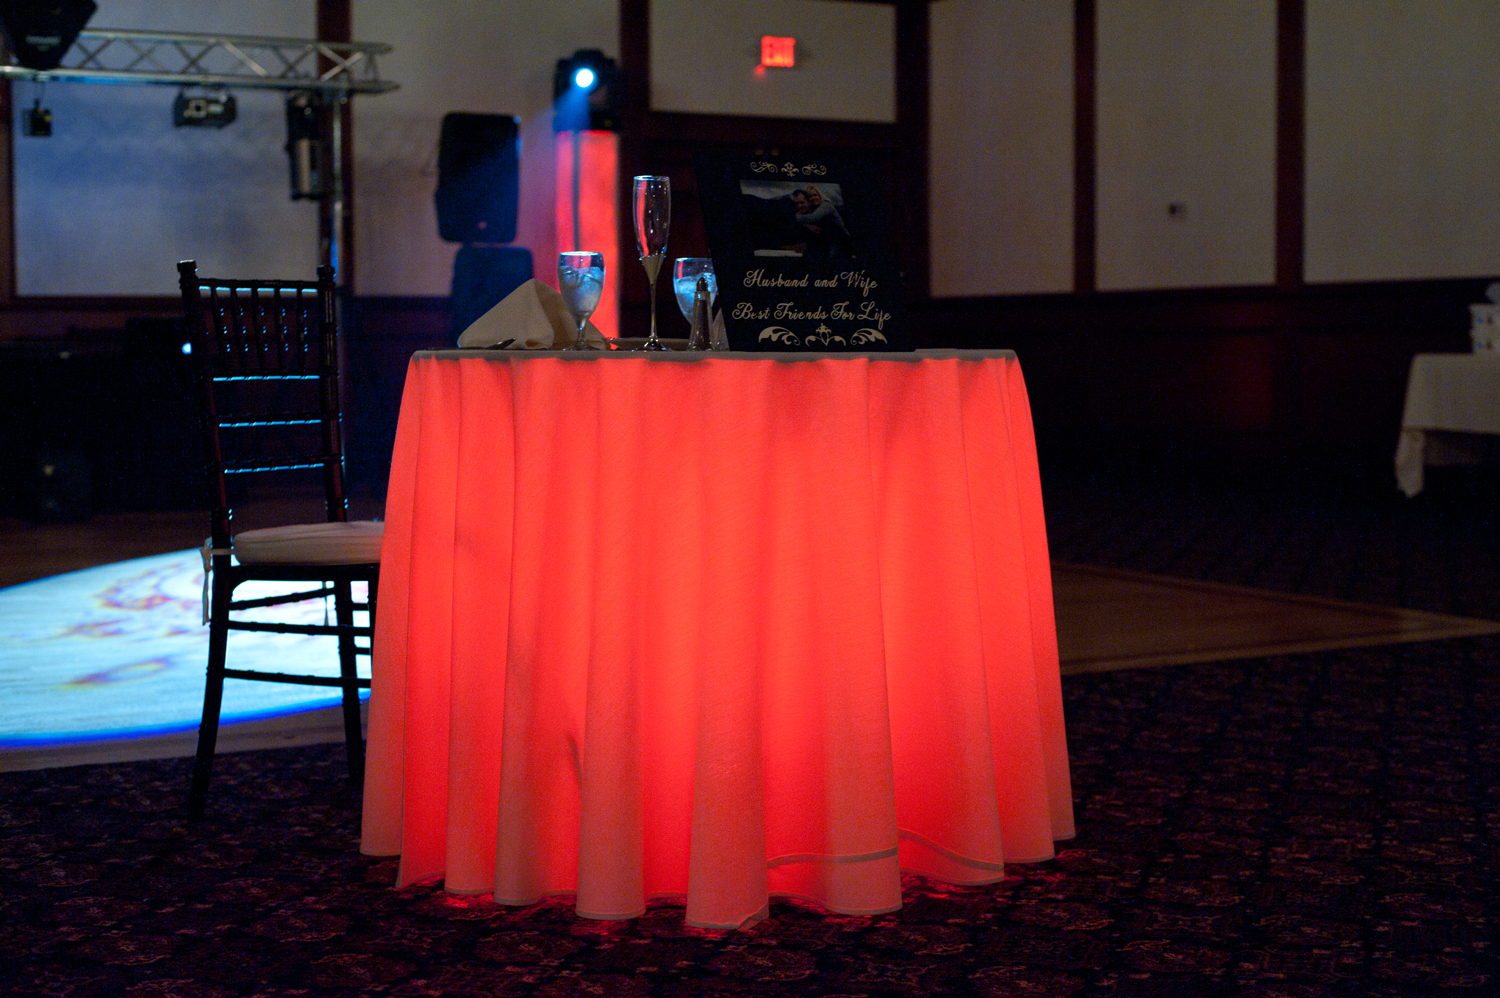 Wedding Wireless LED Uplighting Under Table Apple Hill Farm Country Club Ballroom October 6, 2012 - 1